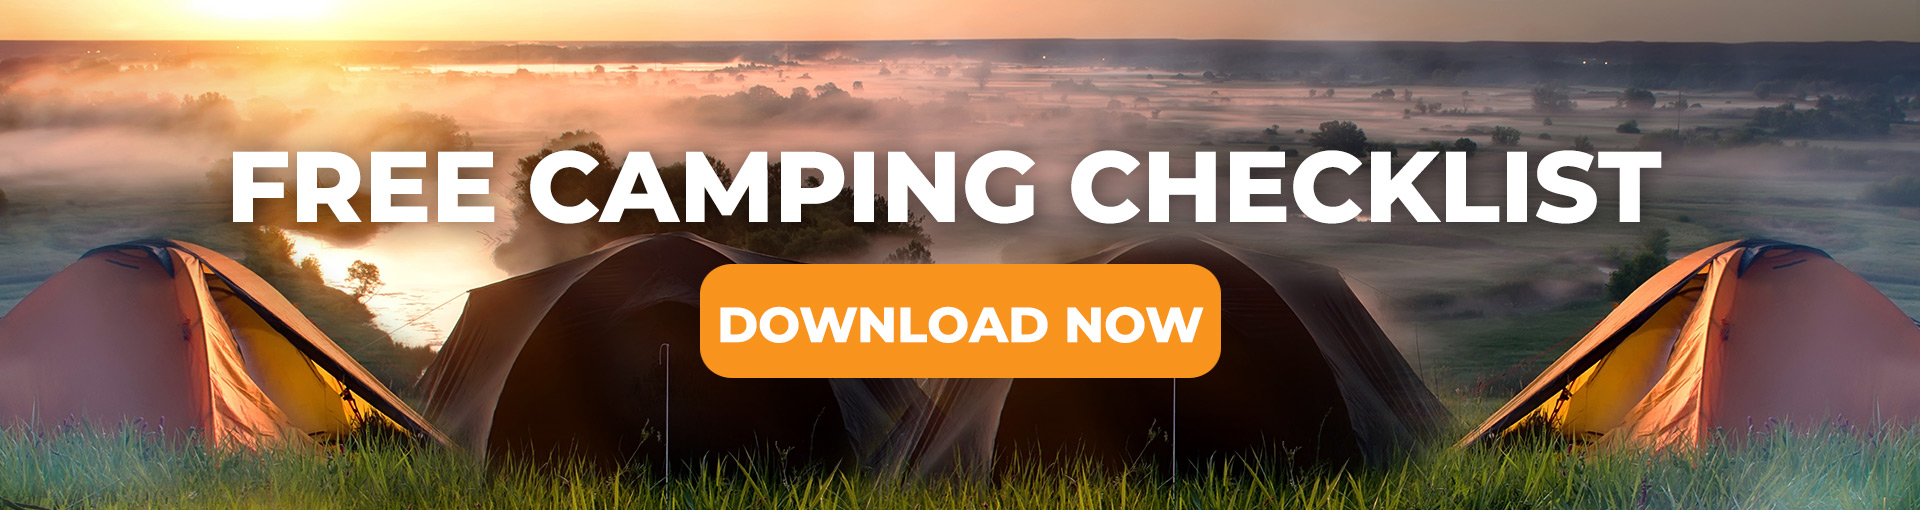 Free Camping Checklist